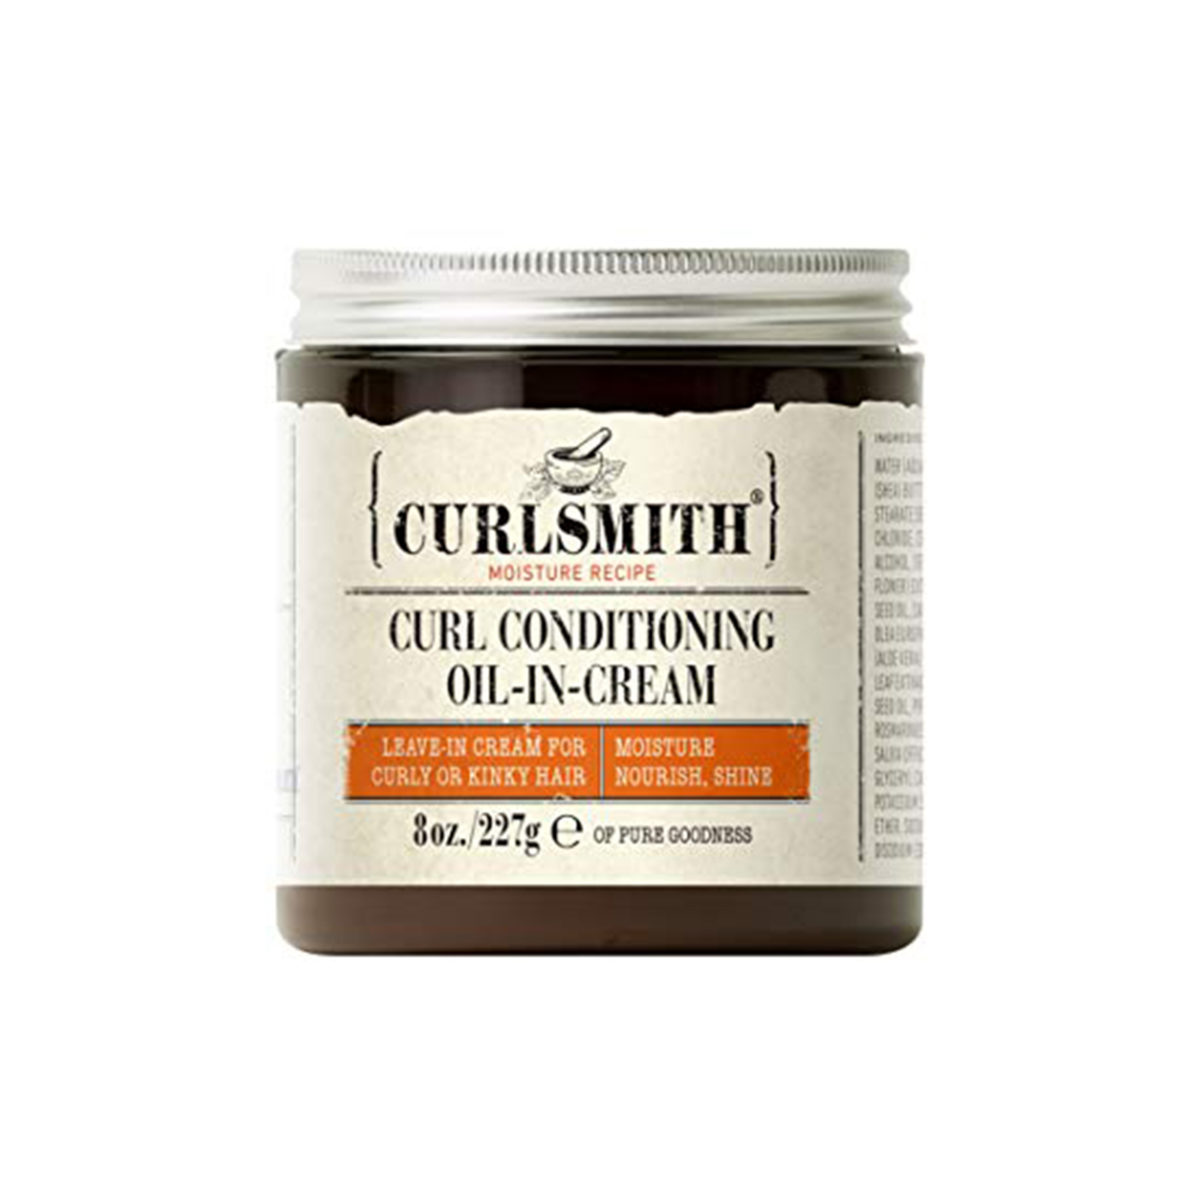 CurlSmith - Curl Conditioning Oil-In-Cream